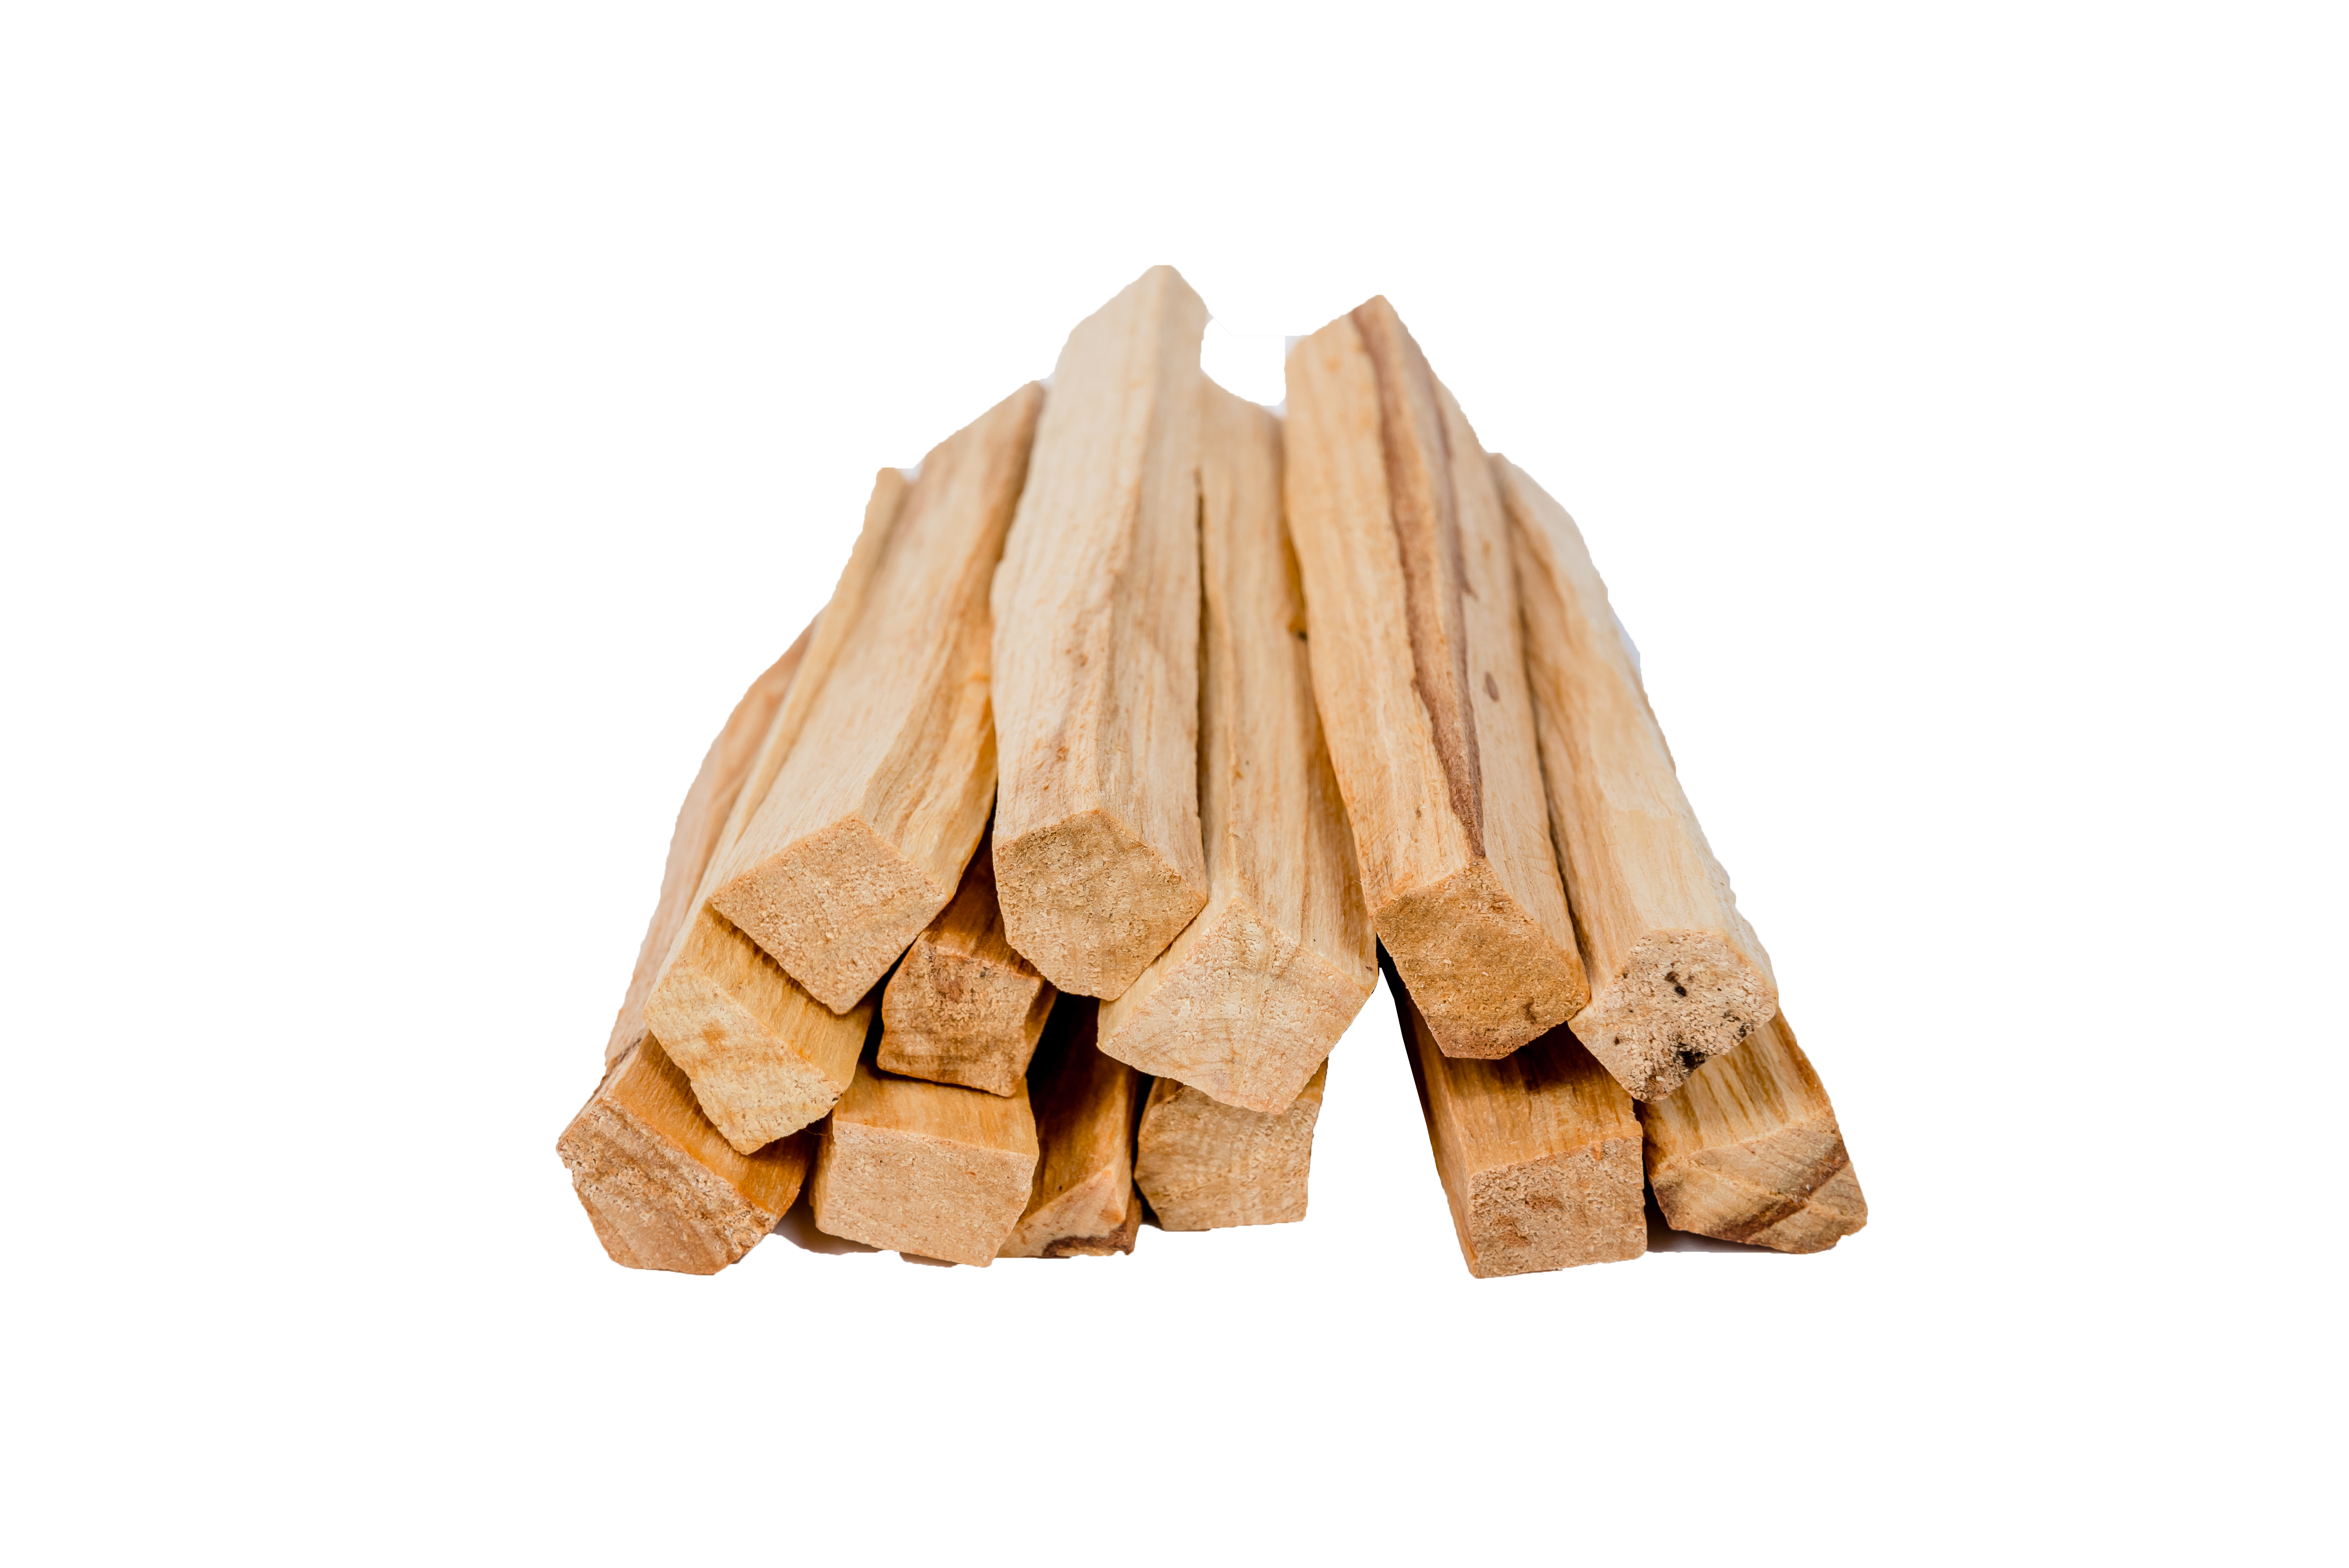 lemn palo santo